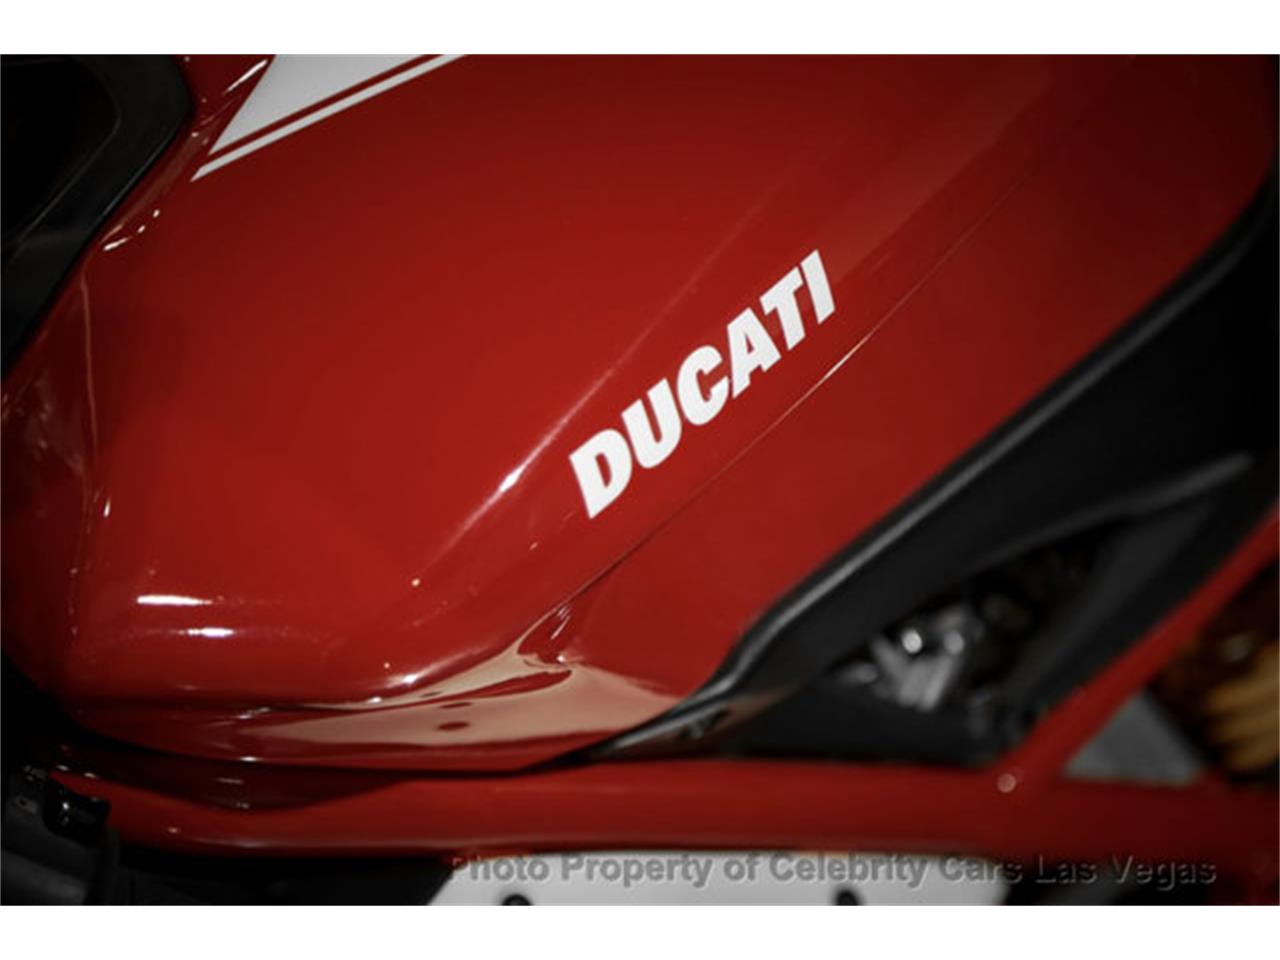 2010 Ducati Motorcycle for sale in Las Vegas, NV – photo 19